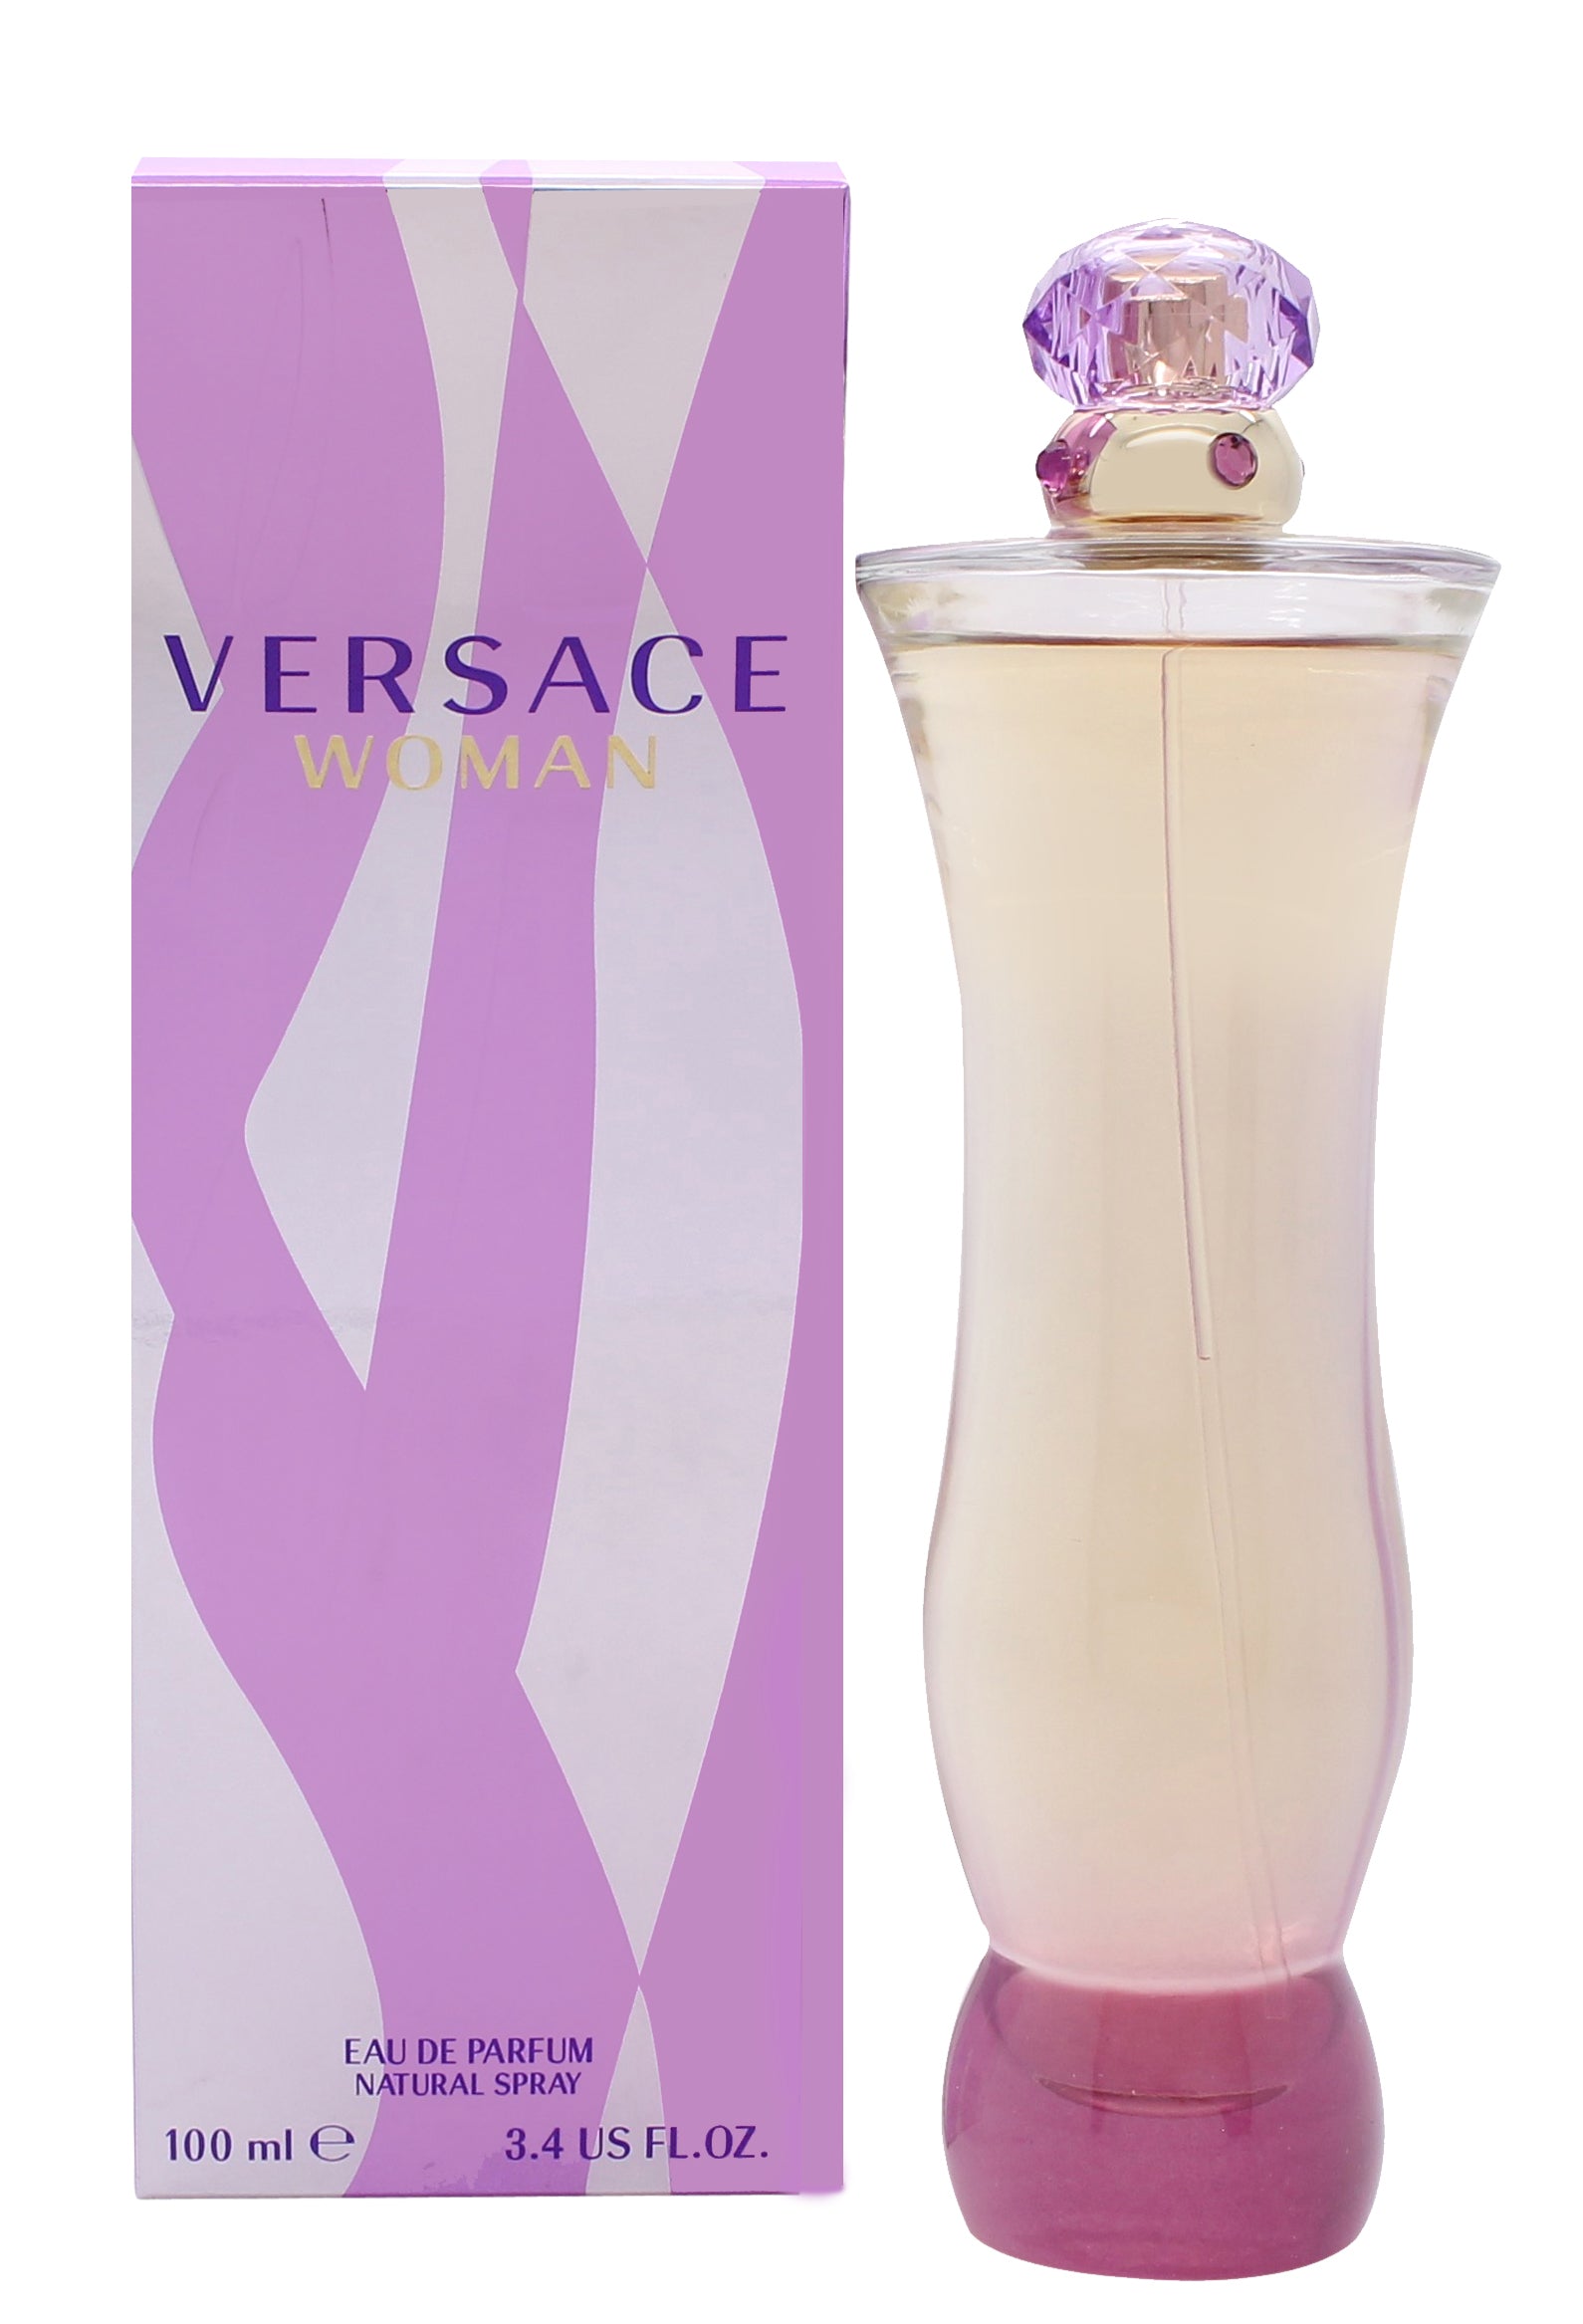 View Versace Woman Eau de Parfum 100ml Spray information